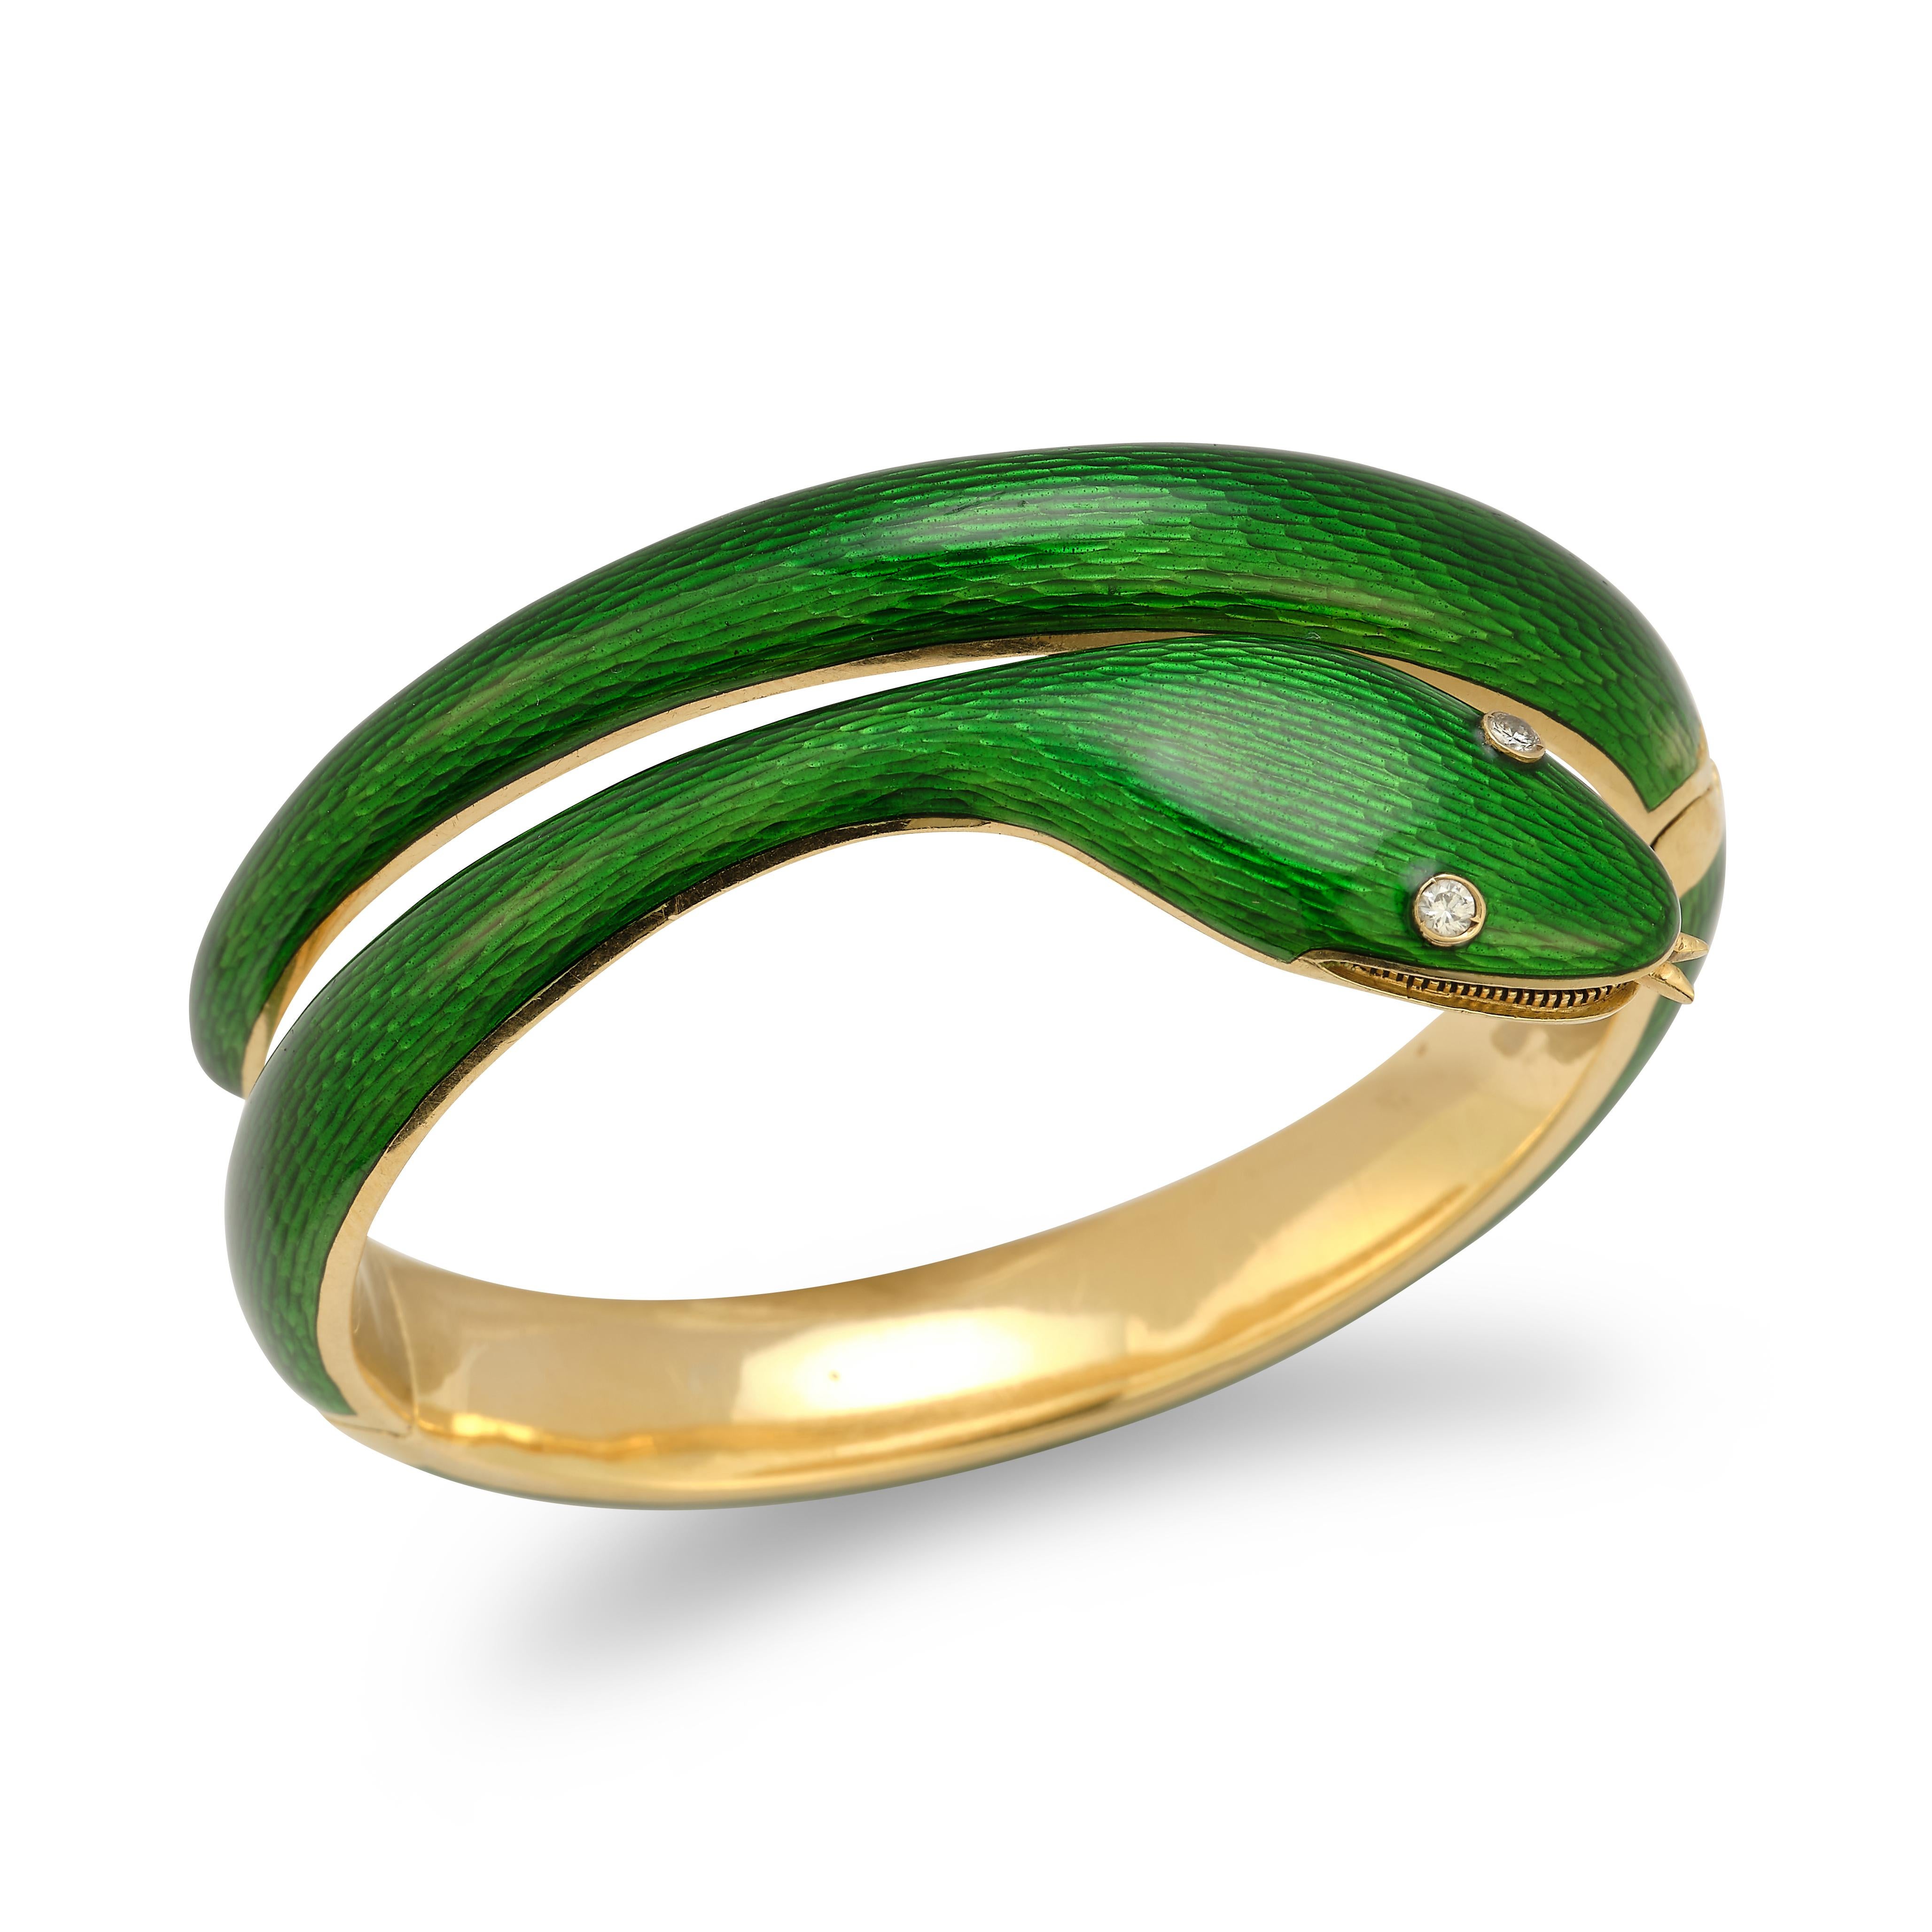 Van Cleef & Arpels - Bracelet Serpent Serpenti en émail vert

Bracelet en émail vert et 2 diamants ronds en guise d'yeux de serpent sertis en or jaune 18k.

Mesures : 2.25